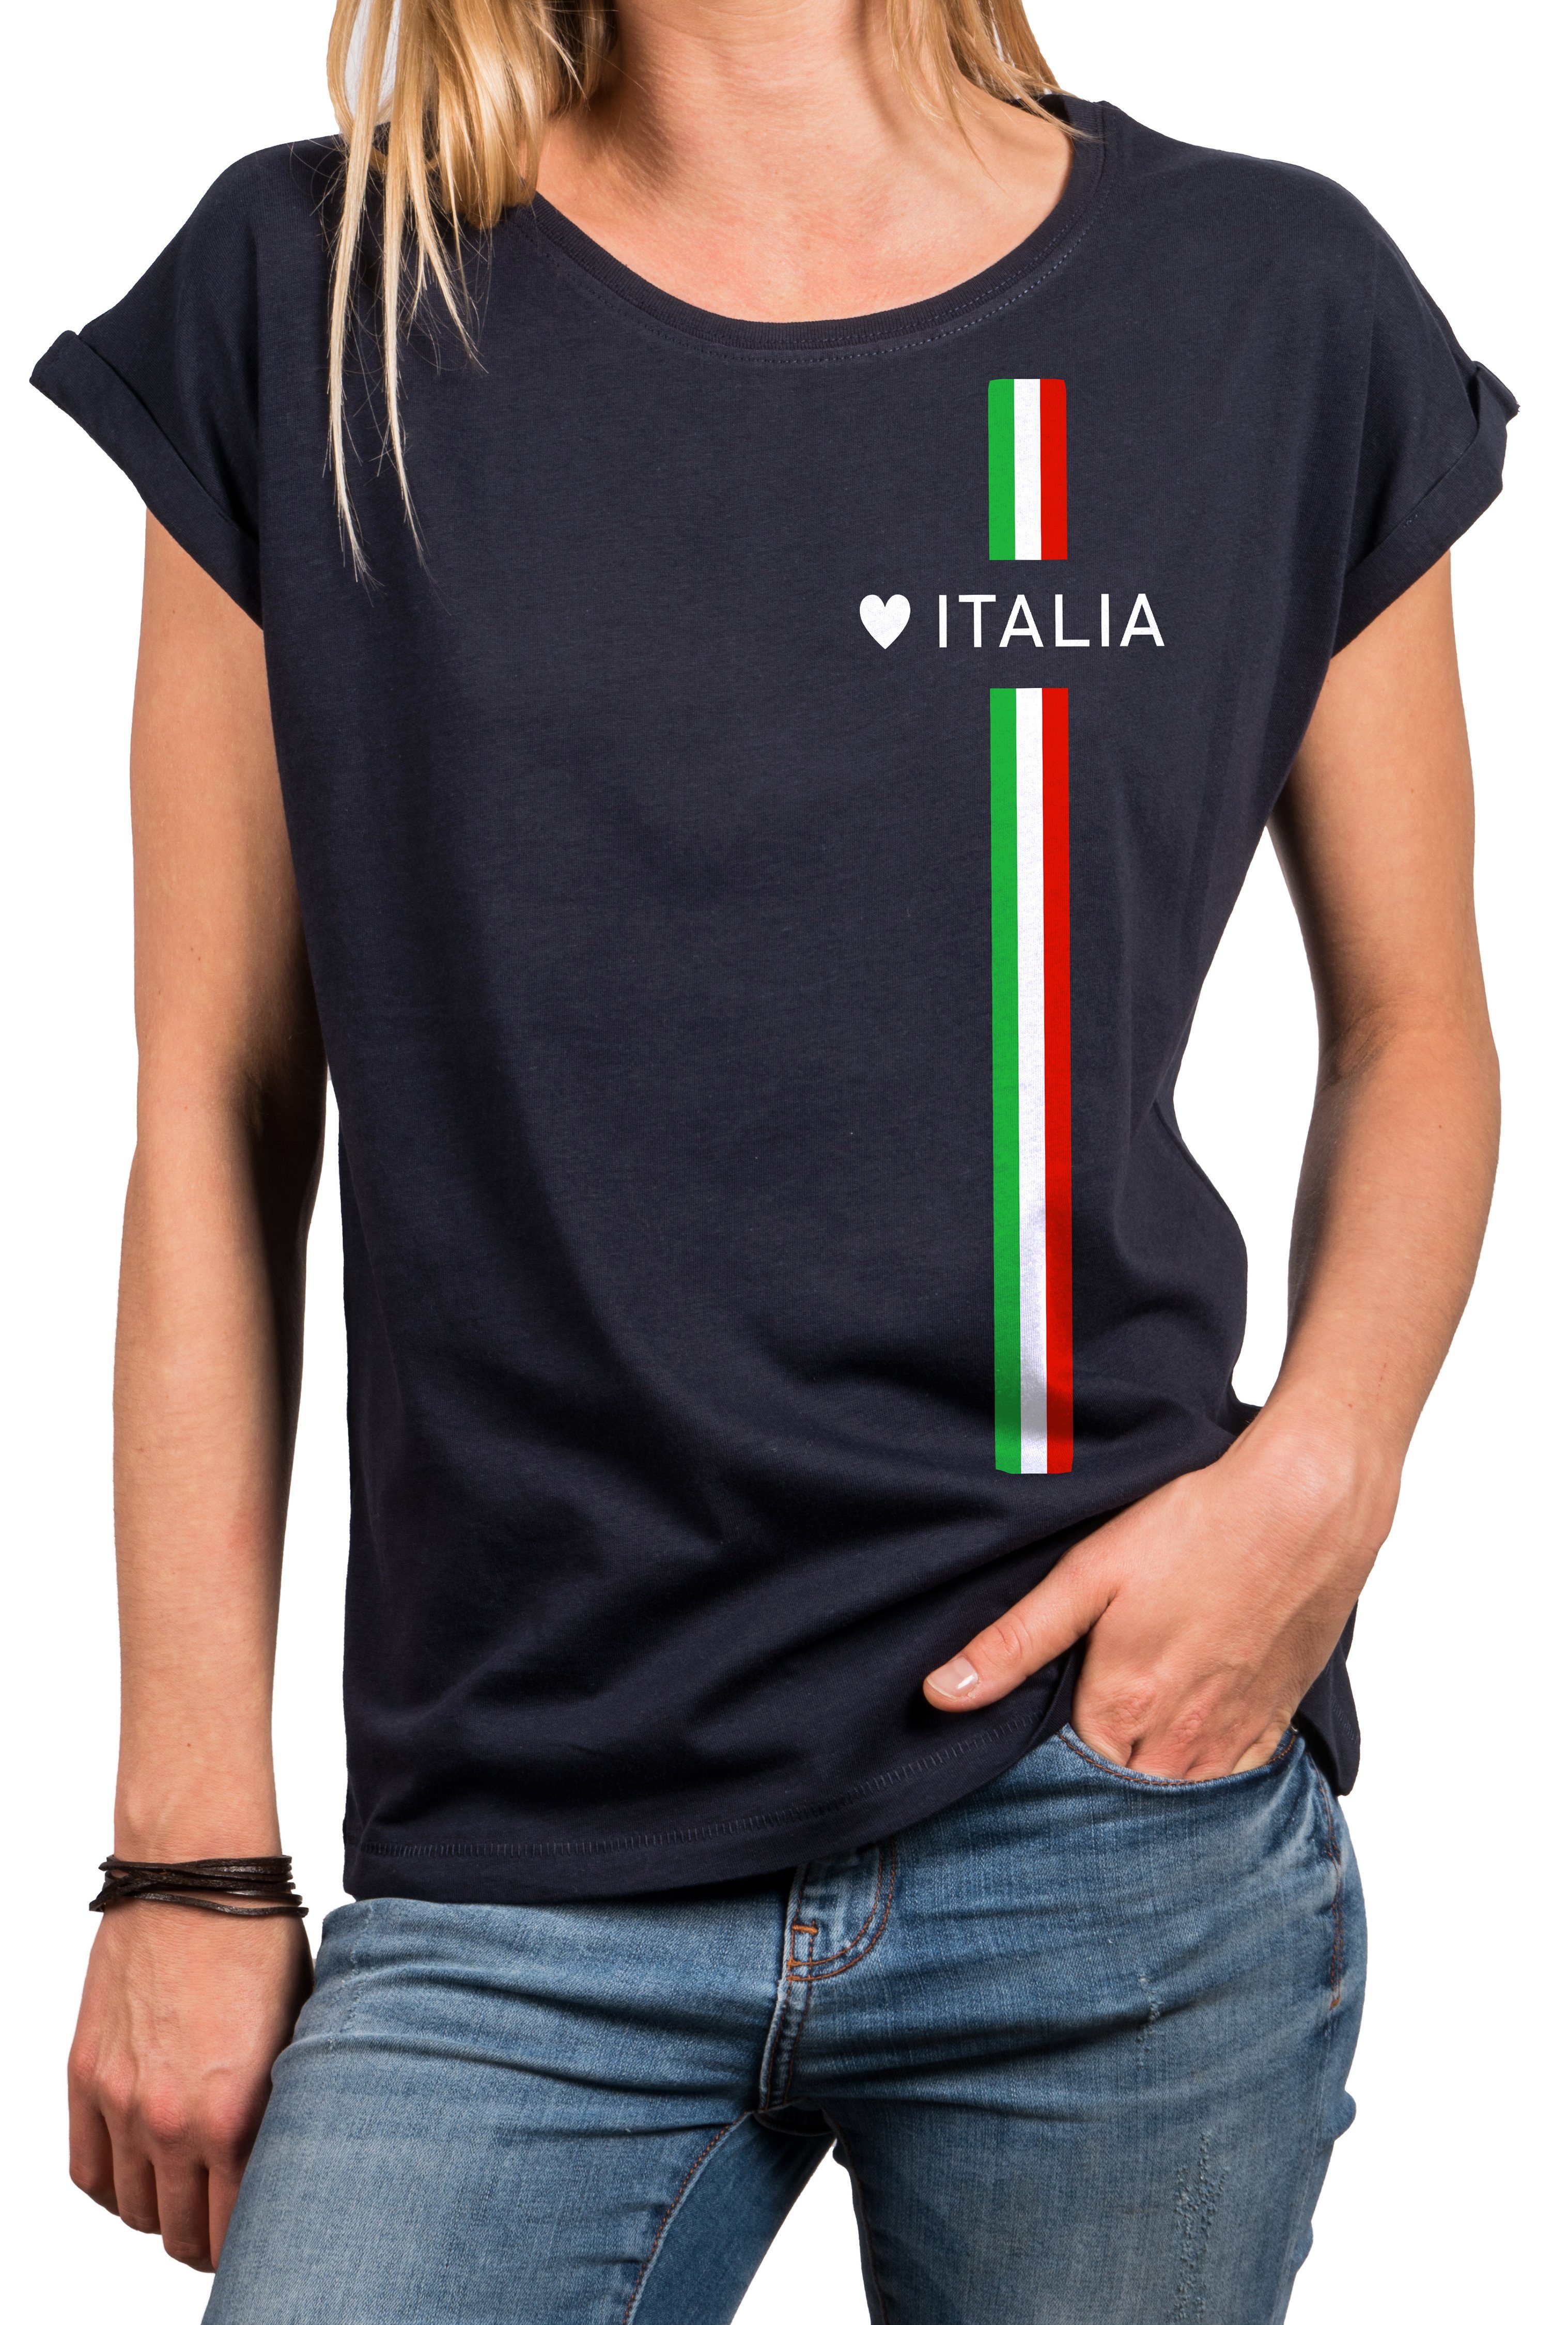 MAKAYA Print-Shirt Damen Druck Mode Italienische Italia Trikot mit Top Herz Kurzarmshirt, Blau Style Italien Italiano